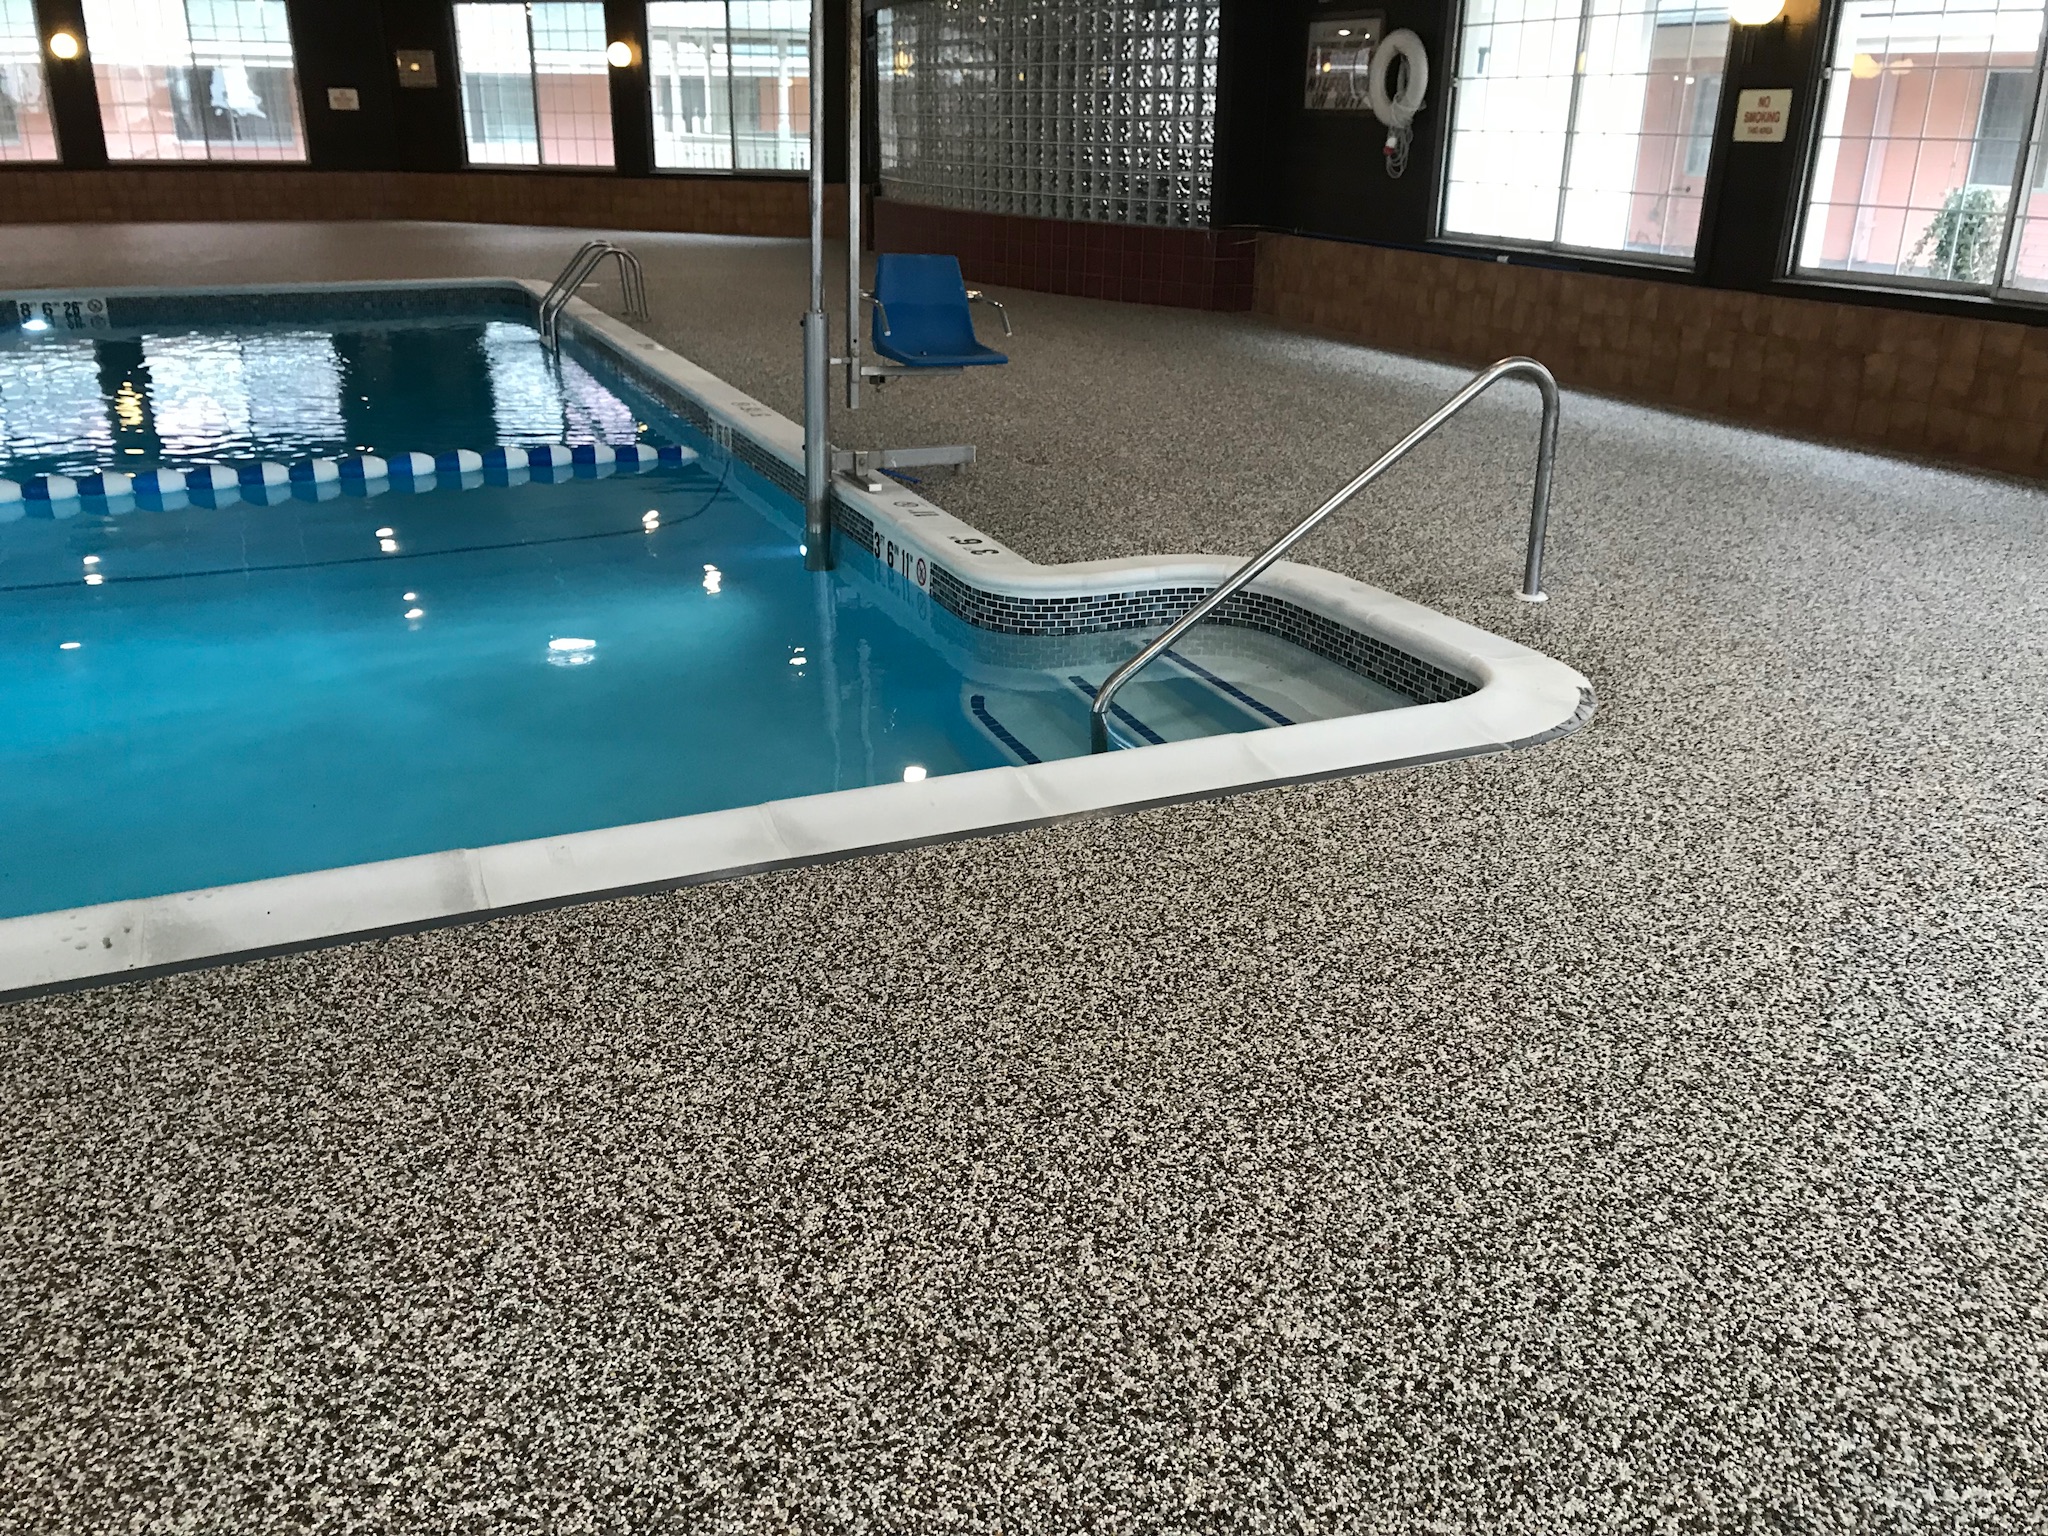 Motel Pool Deck Installation